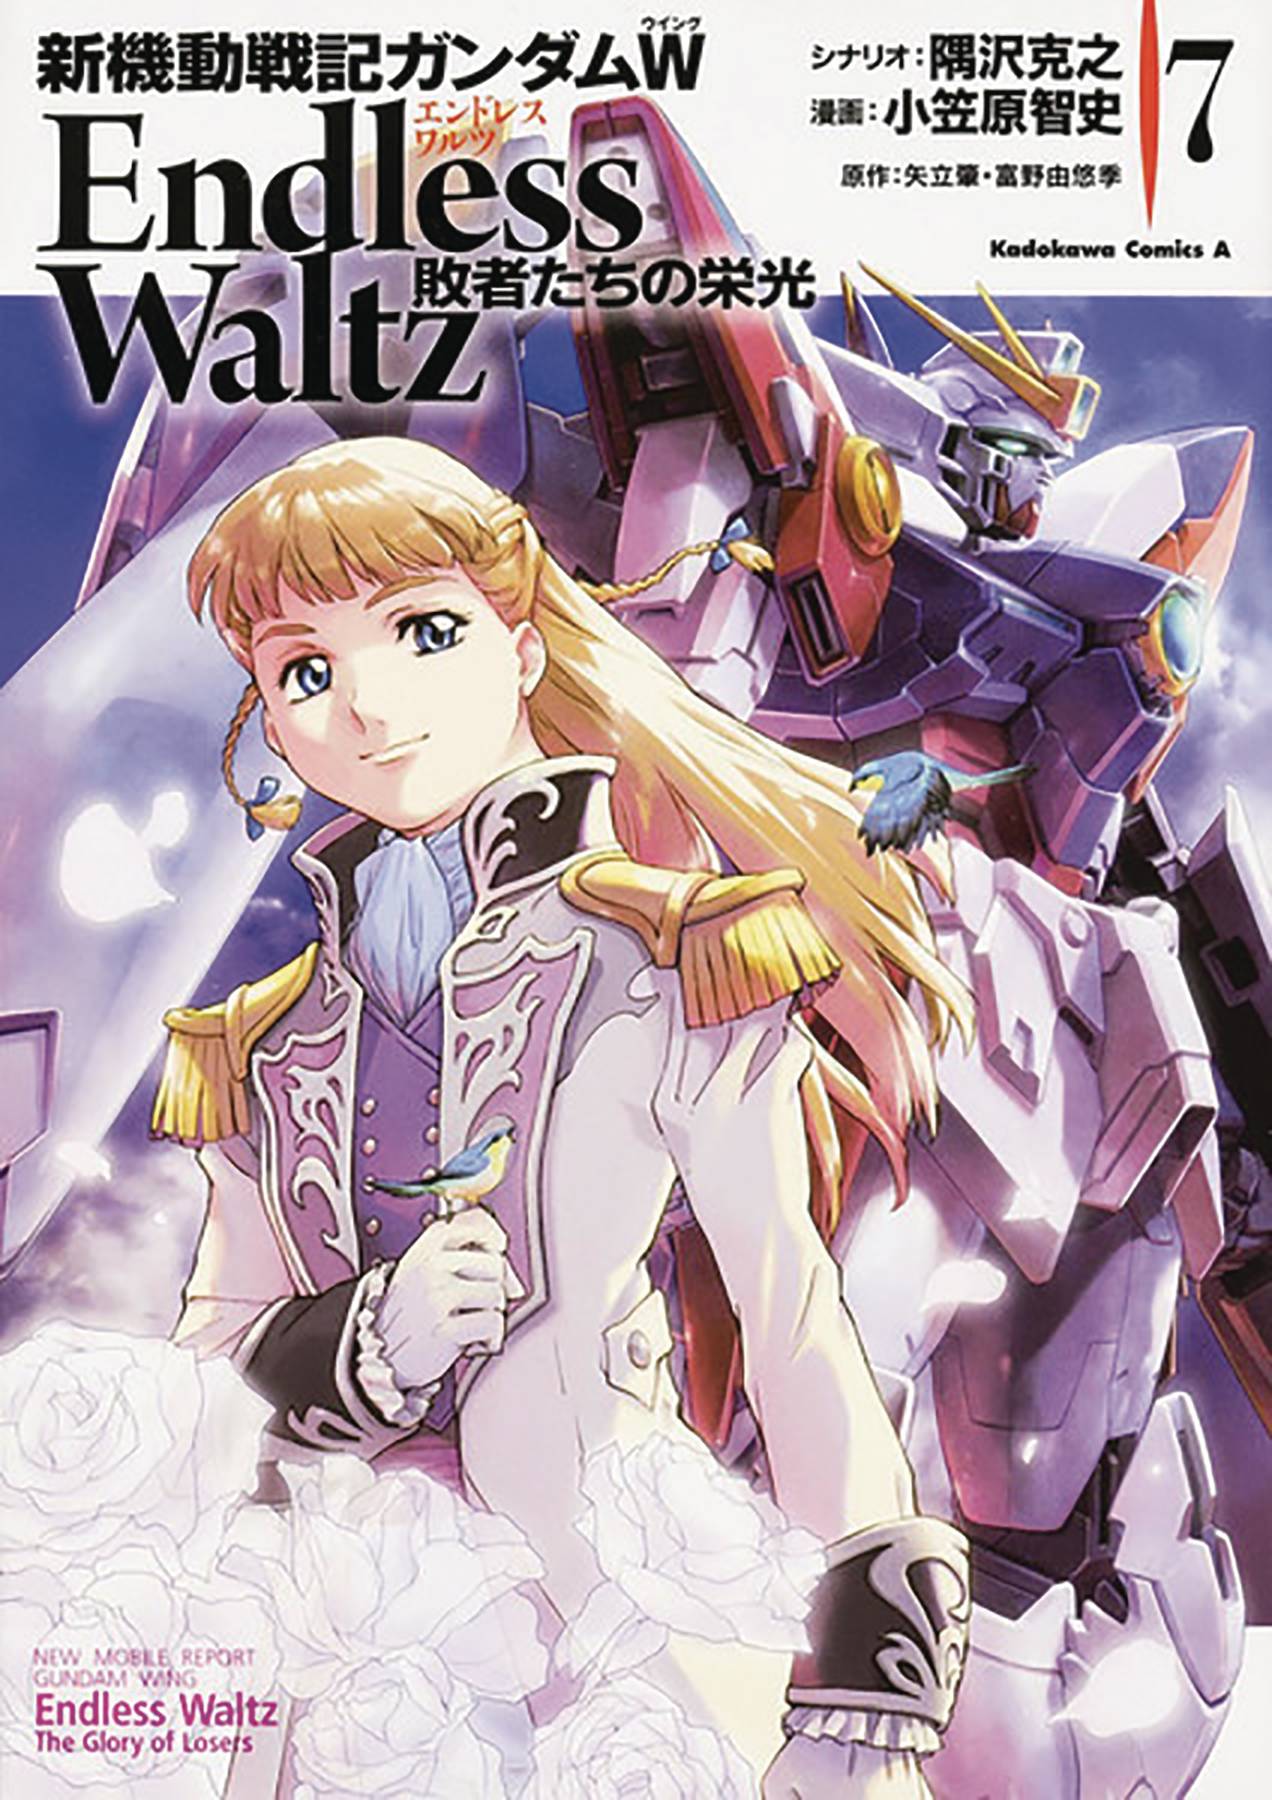 Mobile Suit Gundam Wing Manga Volume 7 Glory of Losers